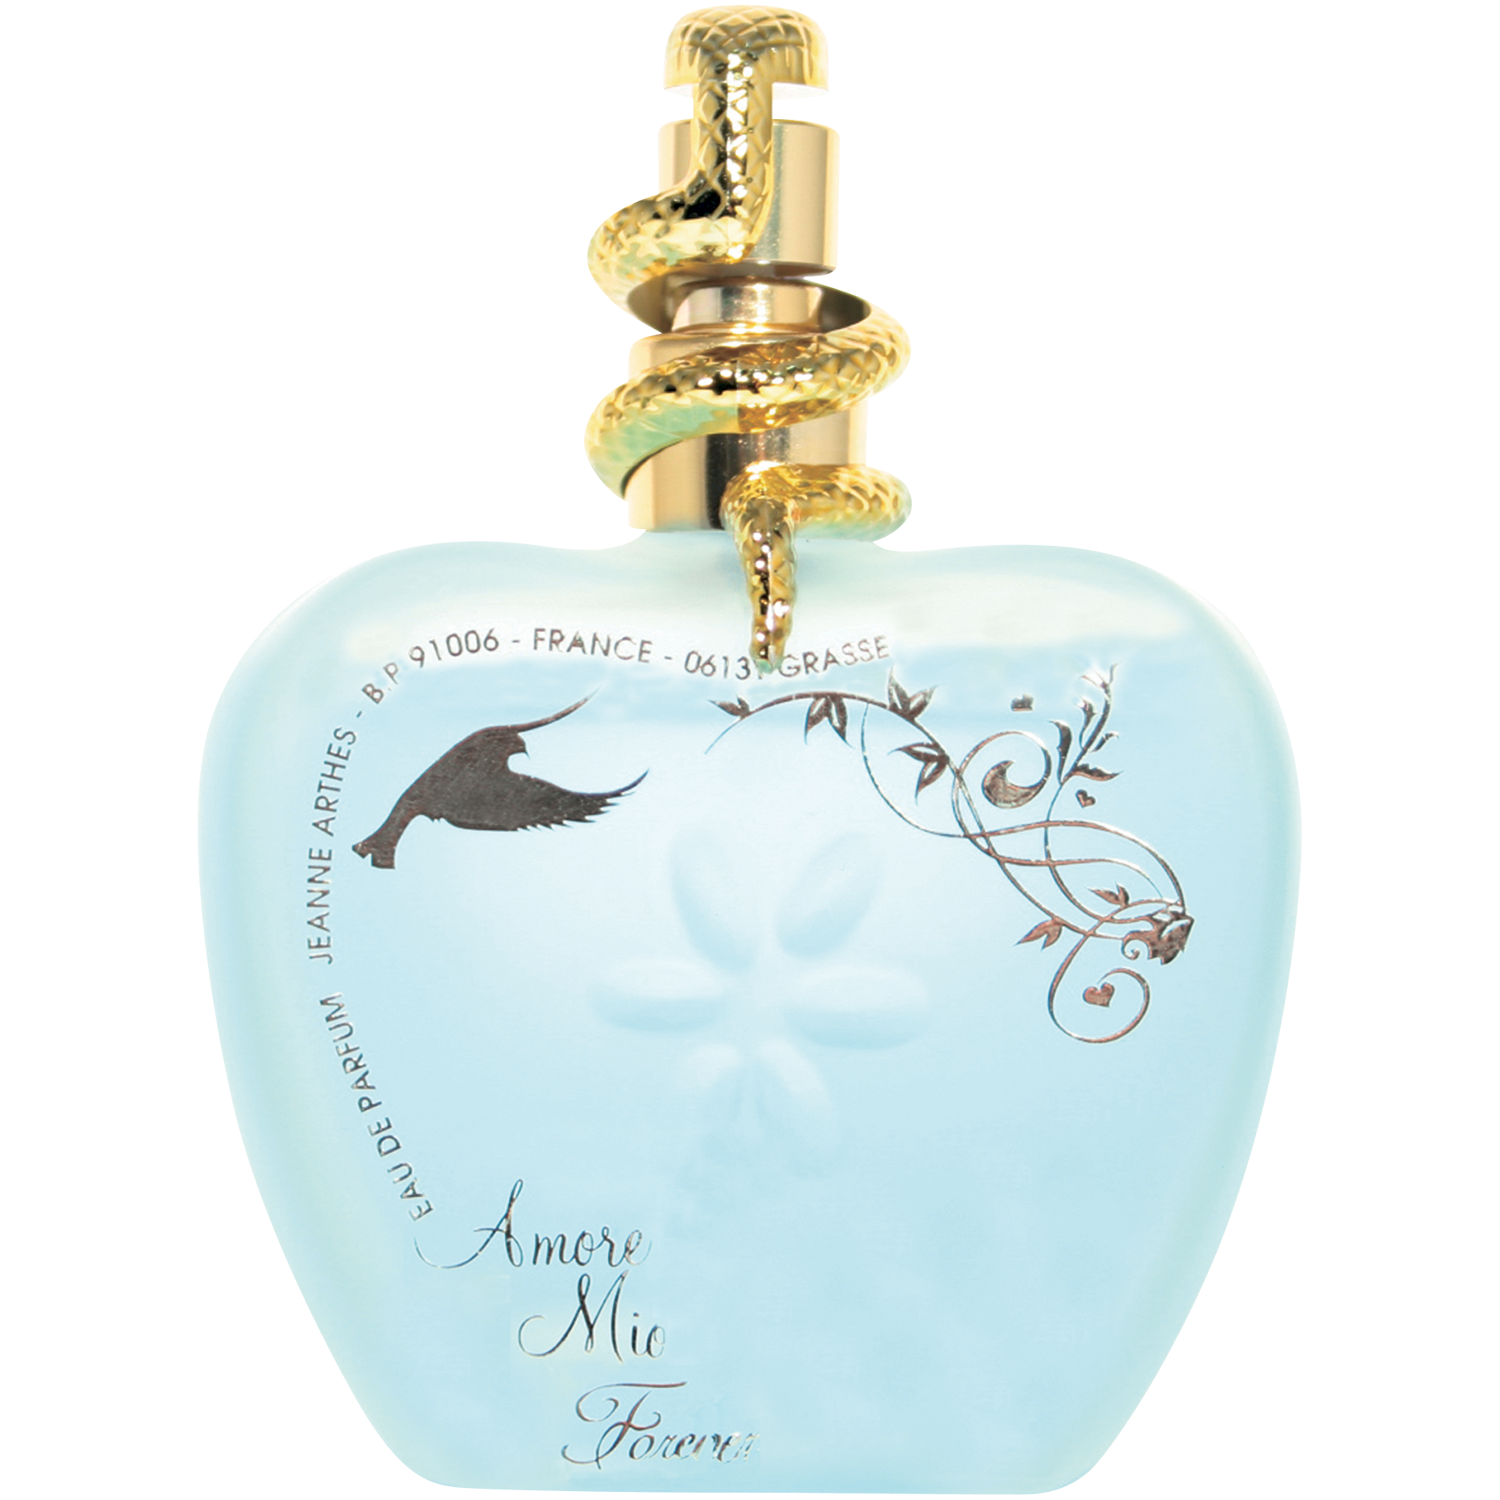 Jeanne Arthes Amore Mio Forever парфюмированная вода для женщин, 100 мл цена и фото